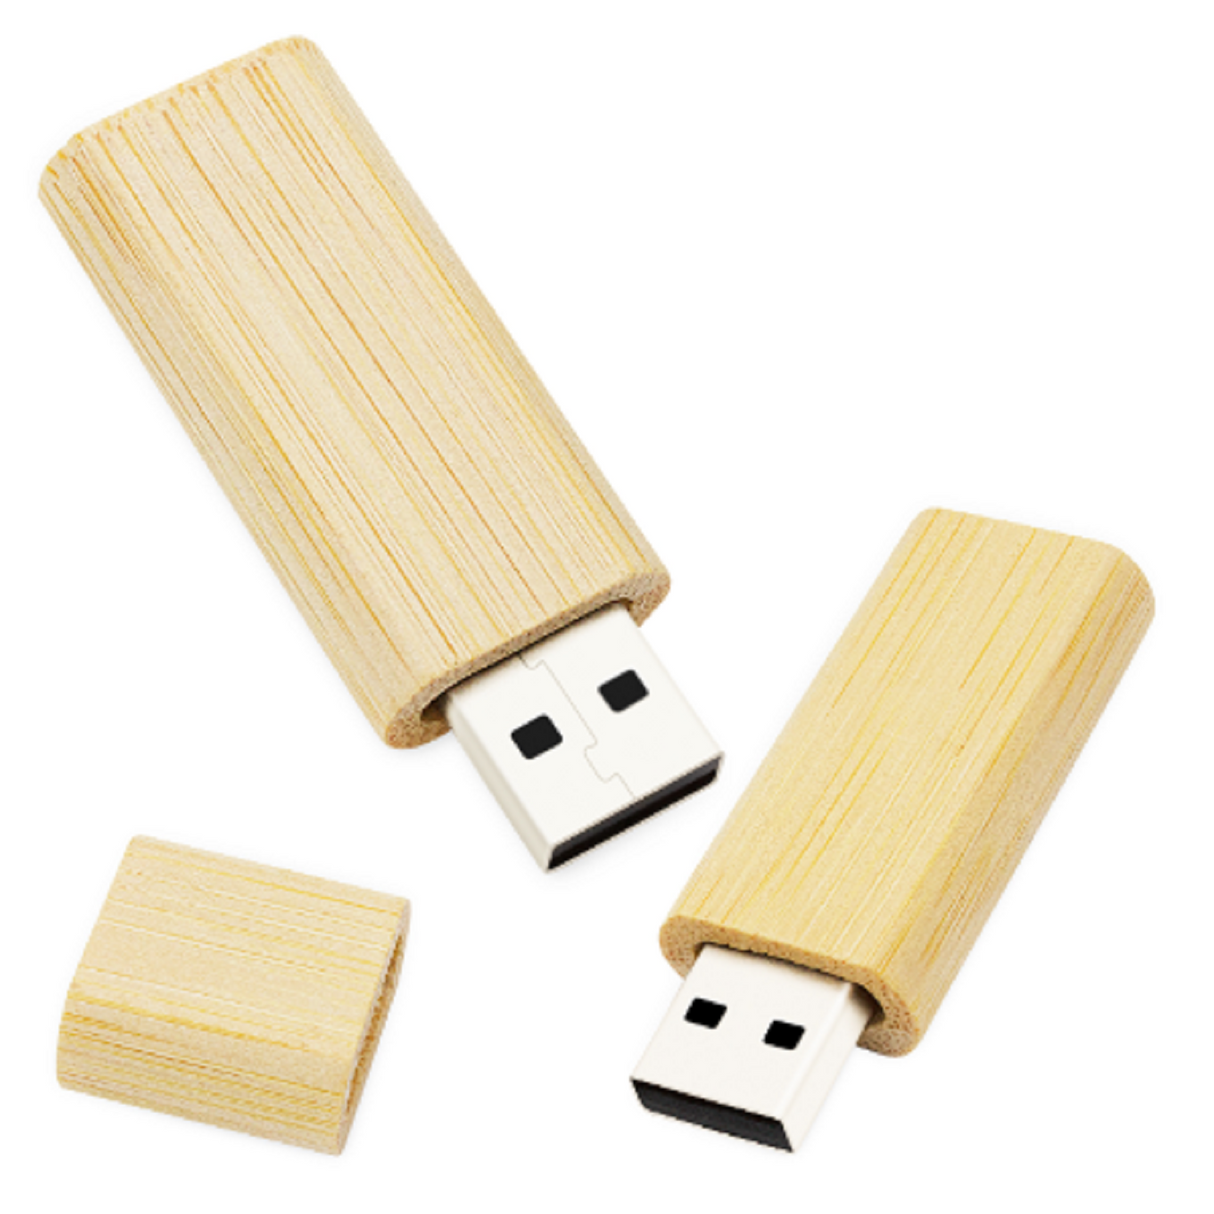 Bamboo Flash drive 16GB - Branded